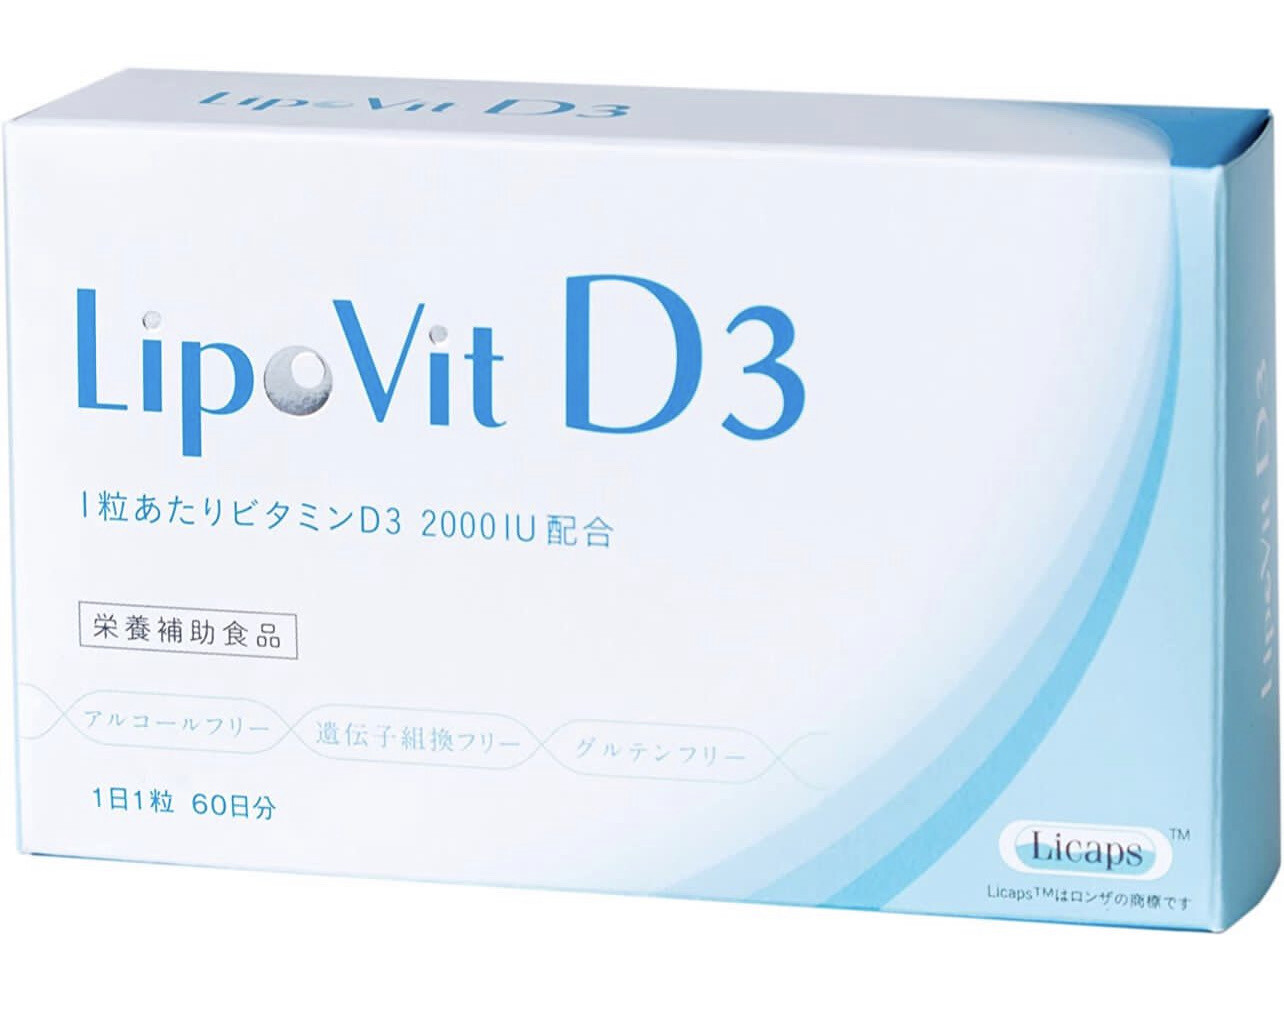 LipoVit D 3 Липосомальный витамин D3 -2000 ед.на 60 дней.